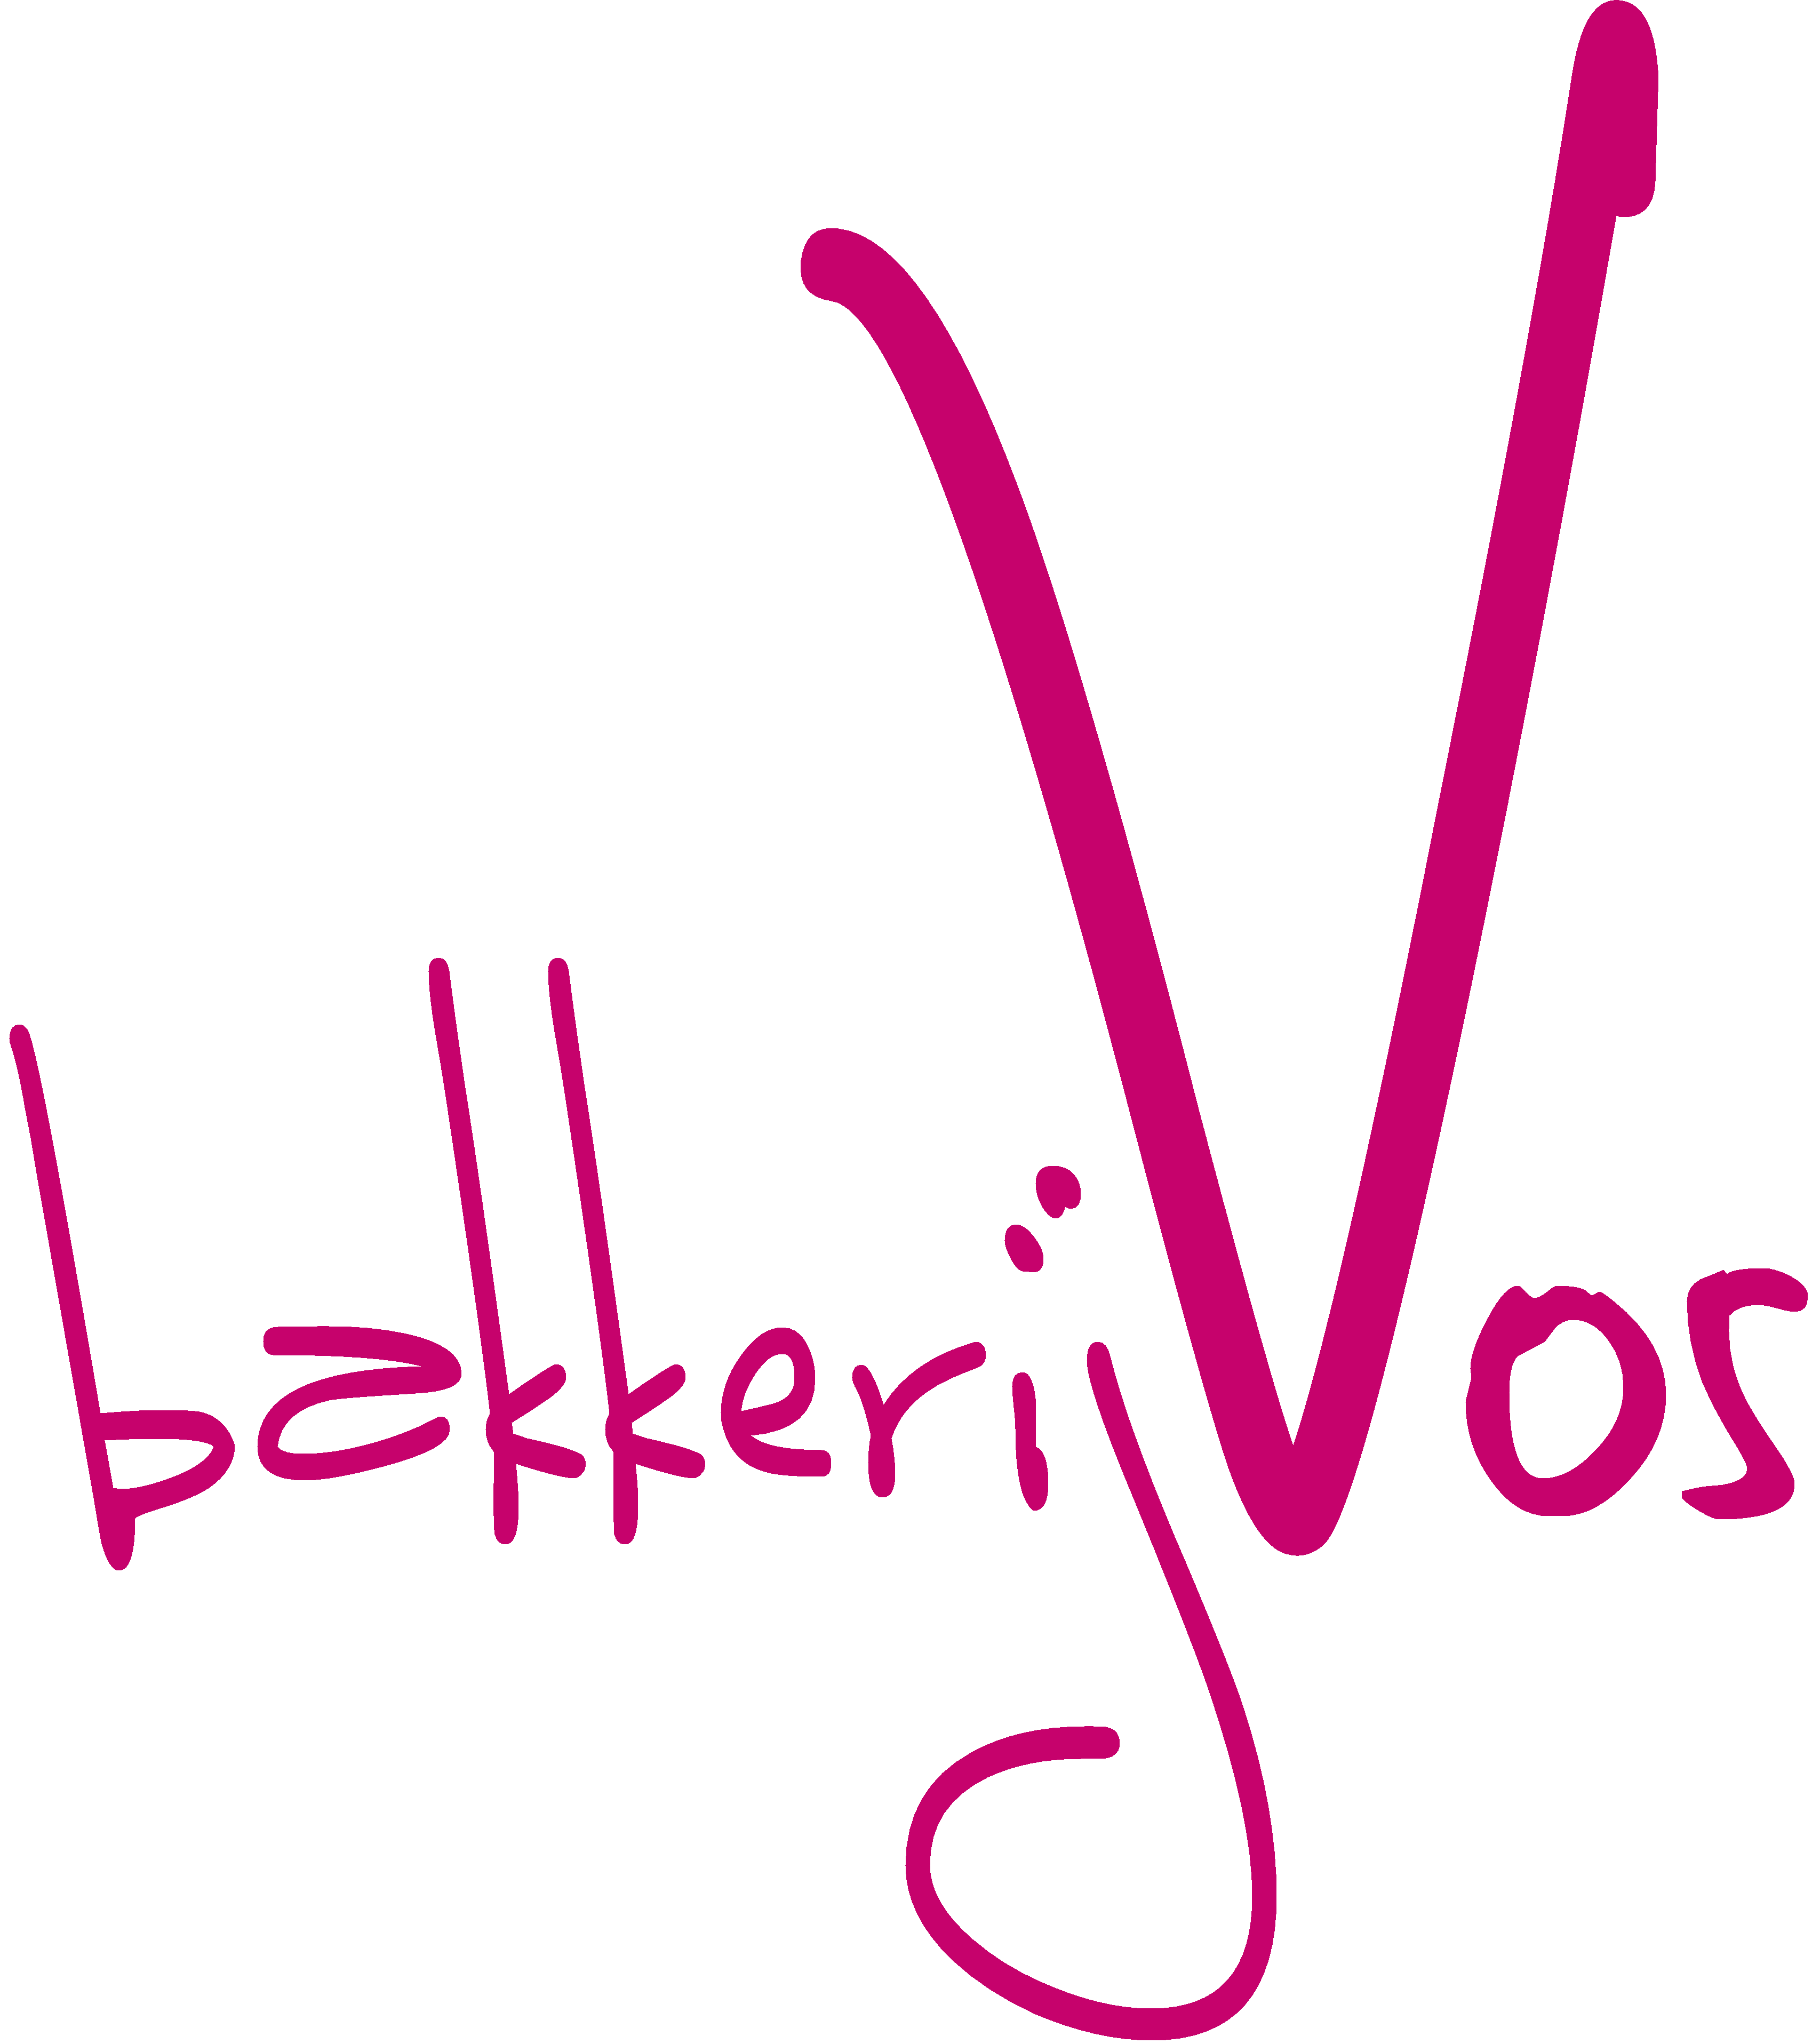 Bakkerij Vos logo